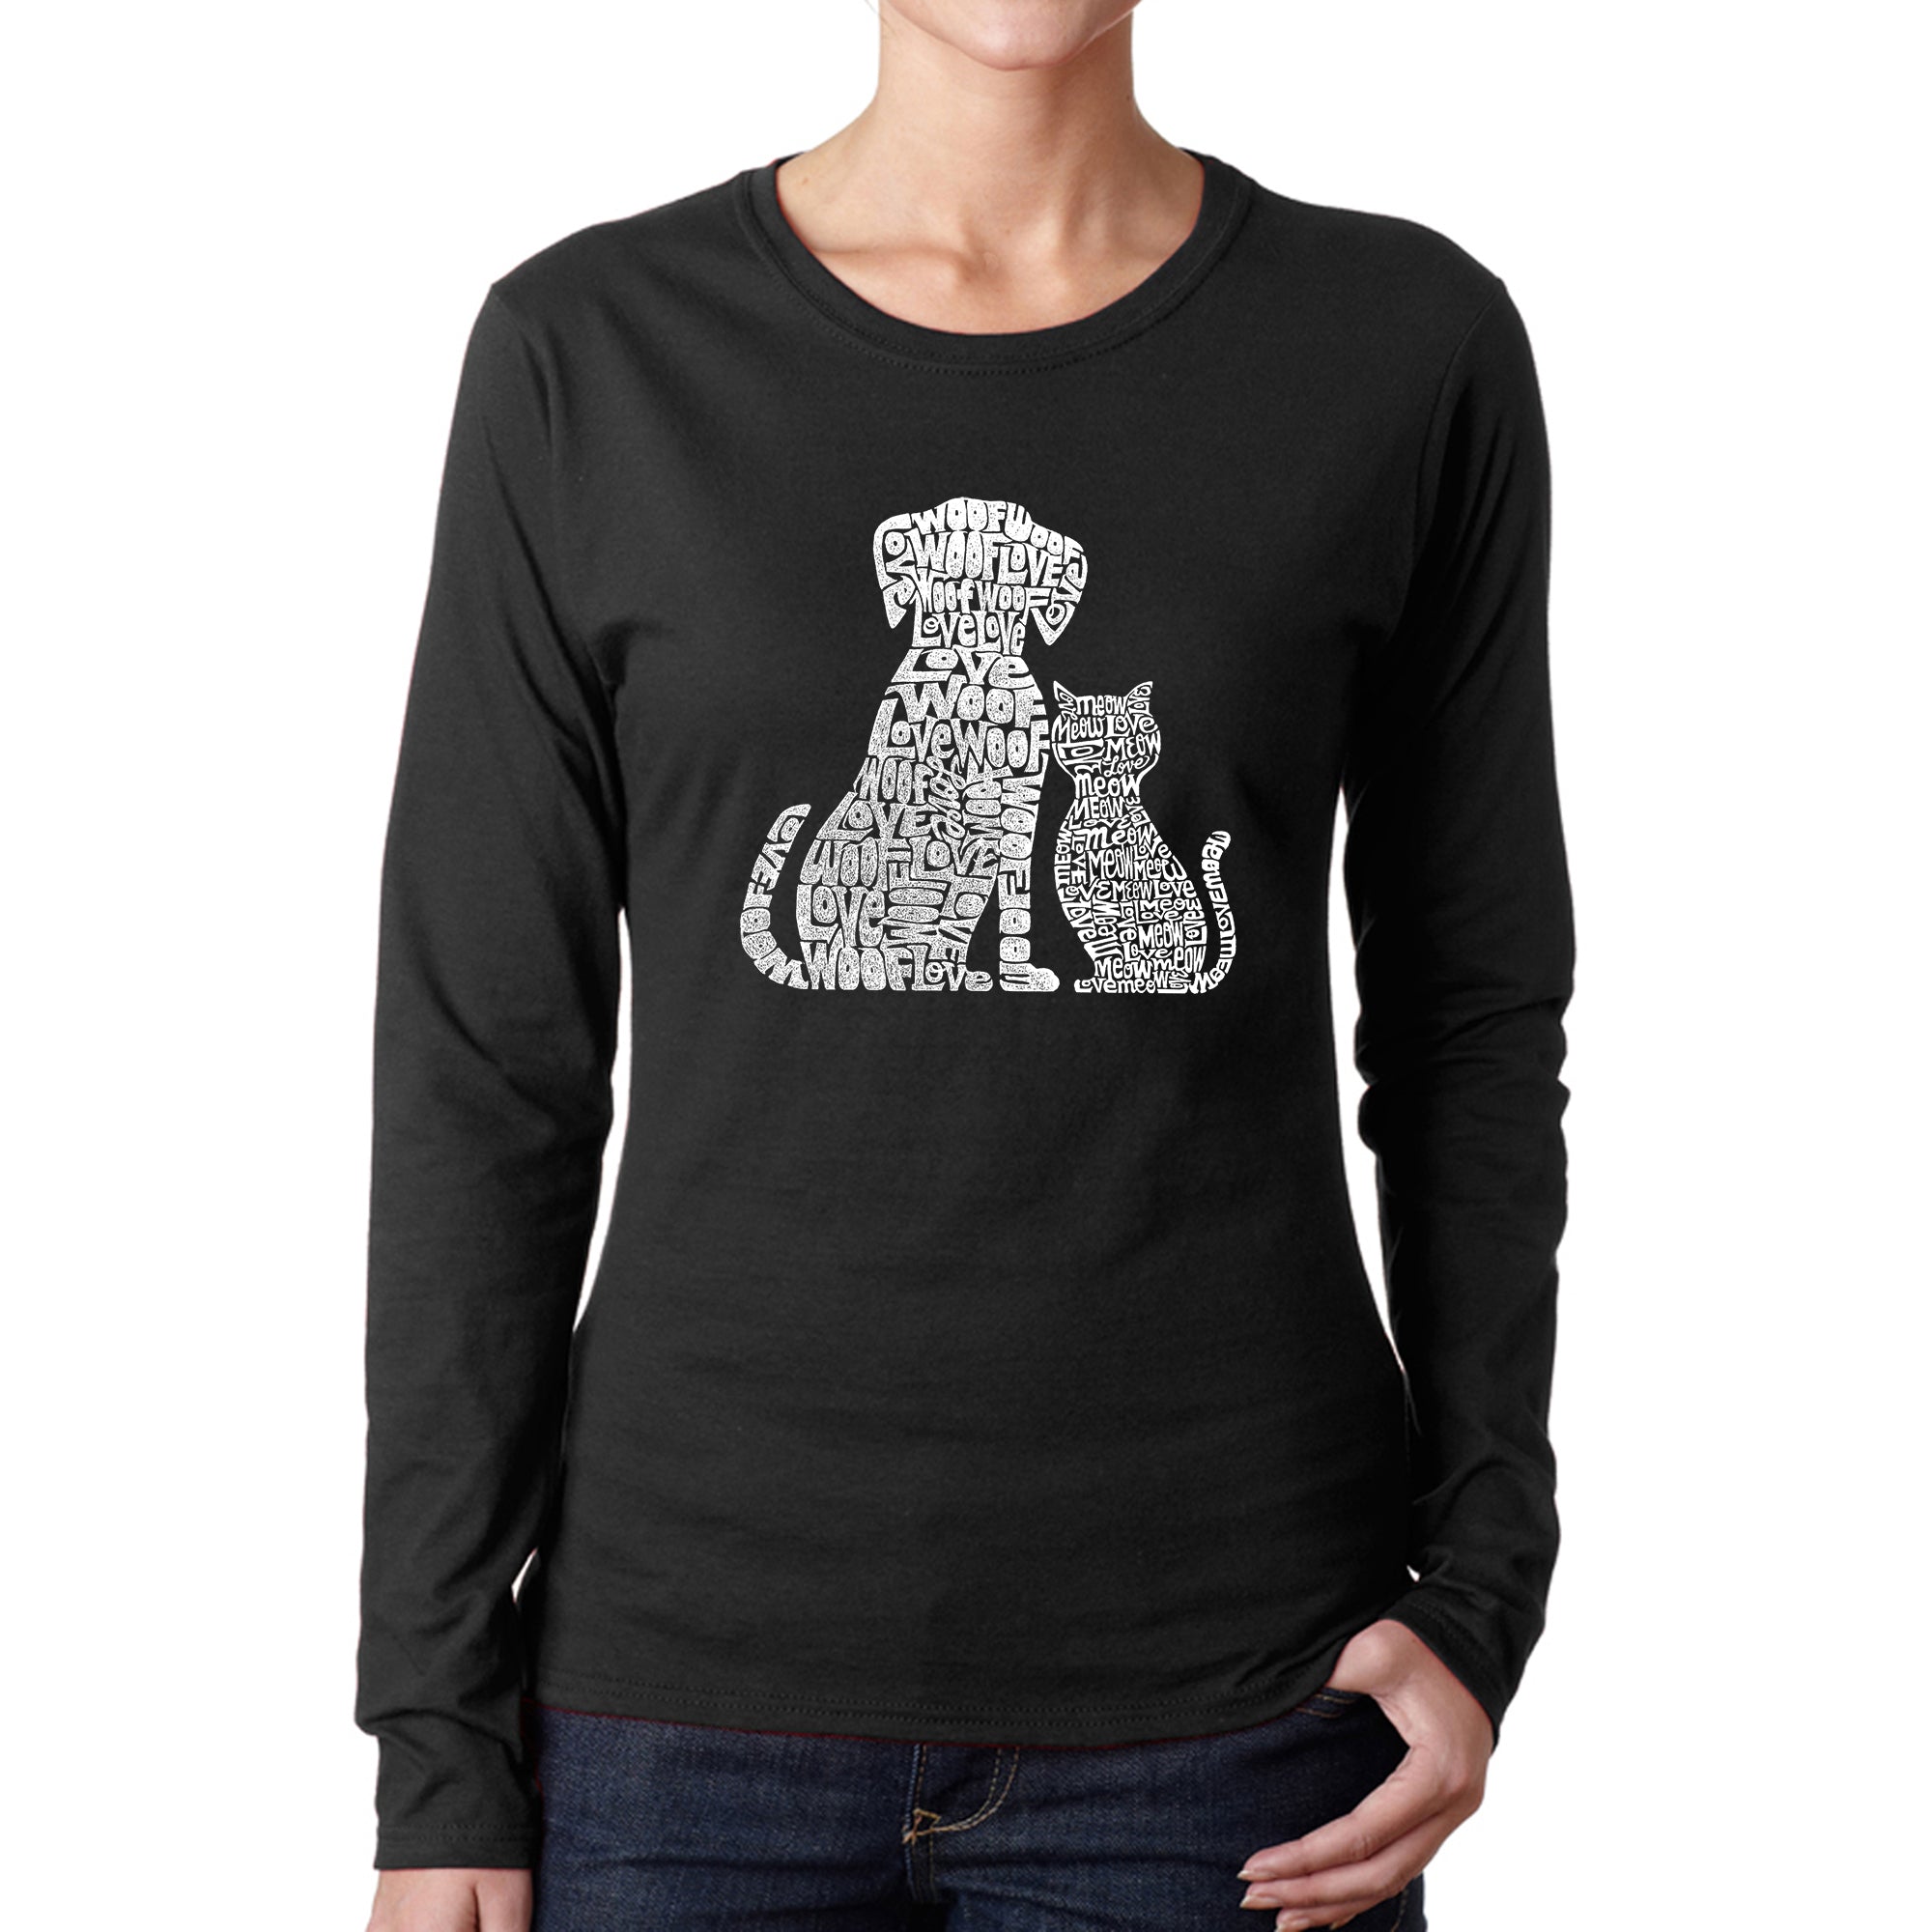 Dogs And Cats - Women's Word Art Long Sleeve T-Shirt - Black - Medium